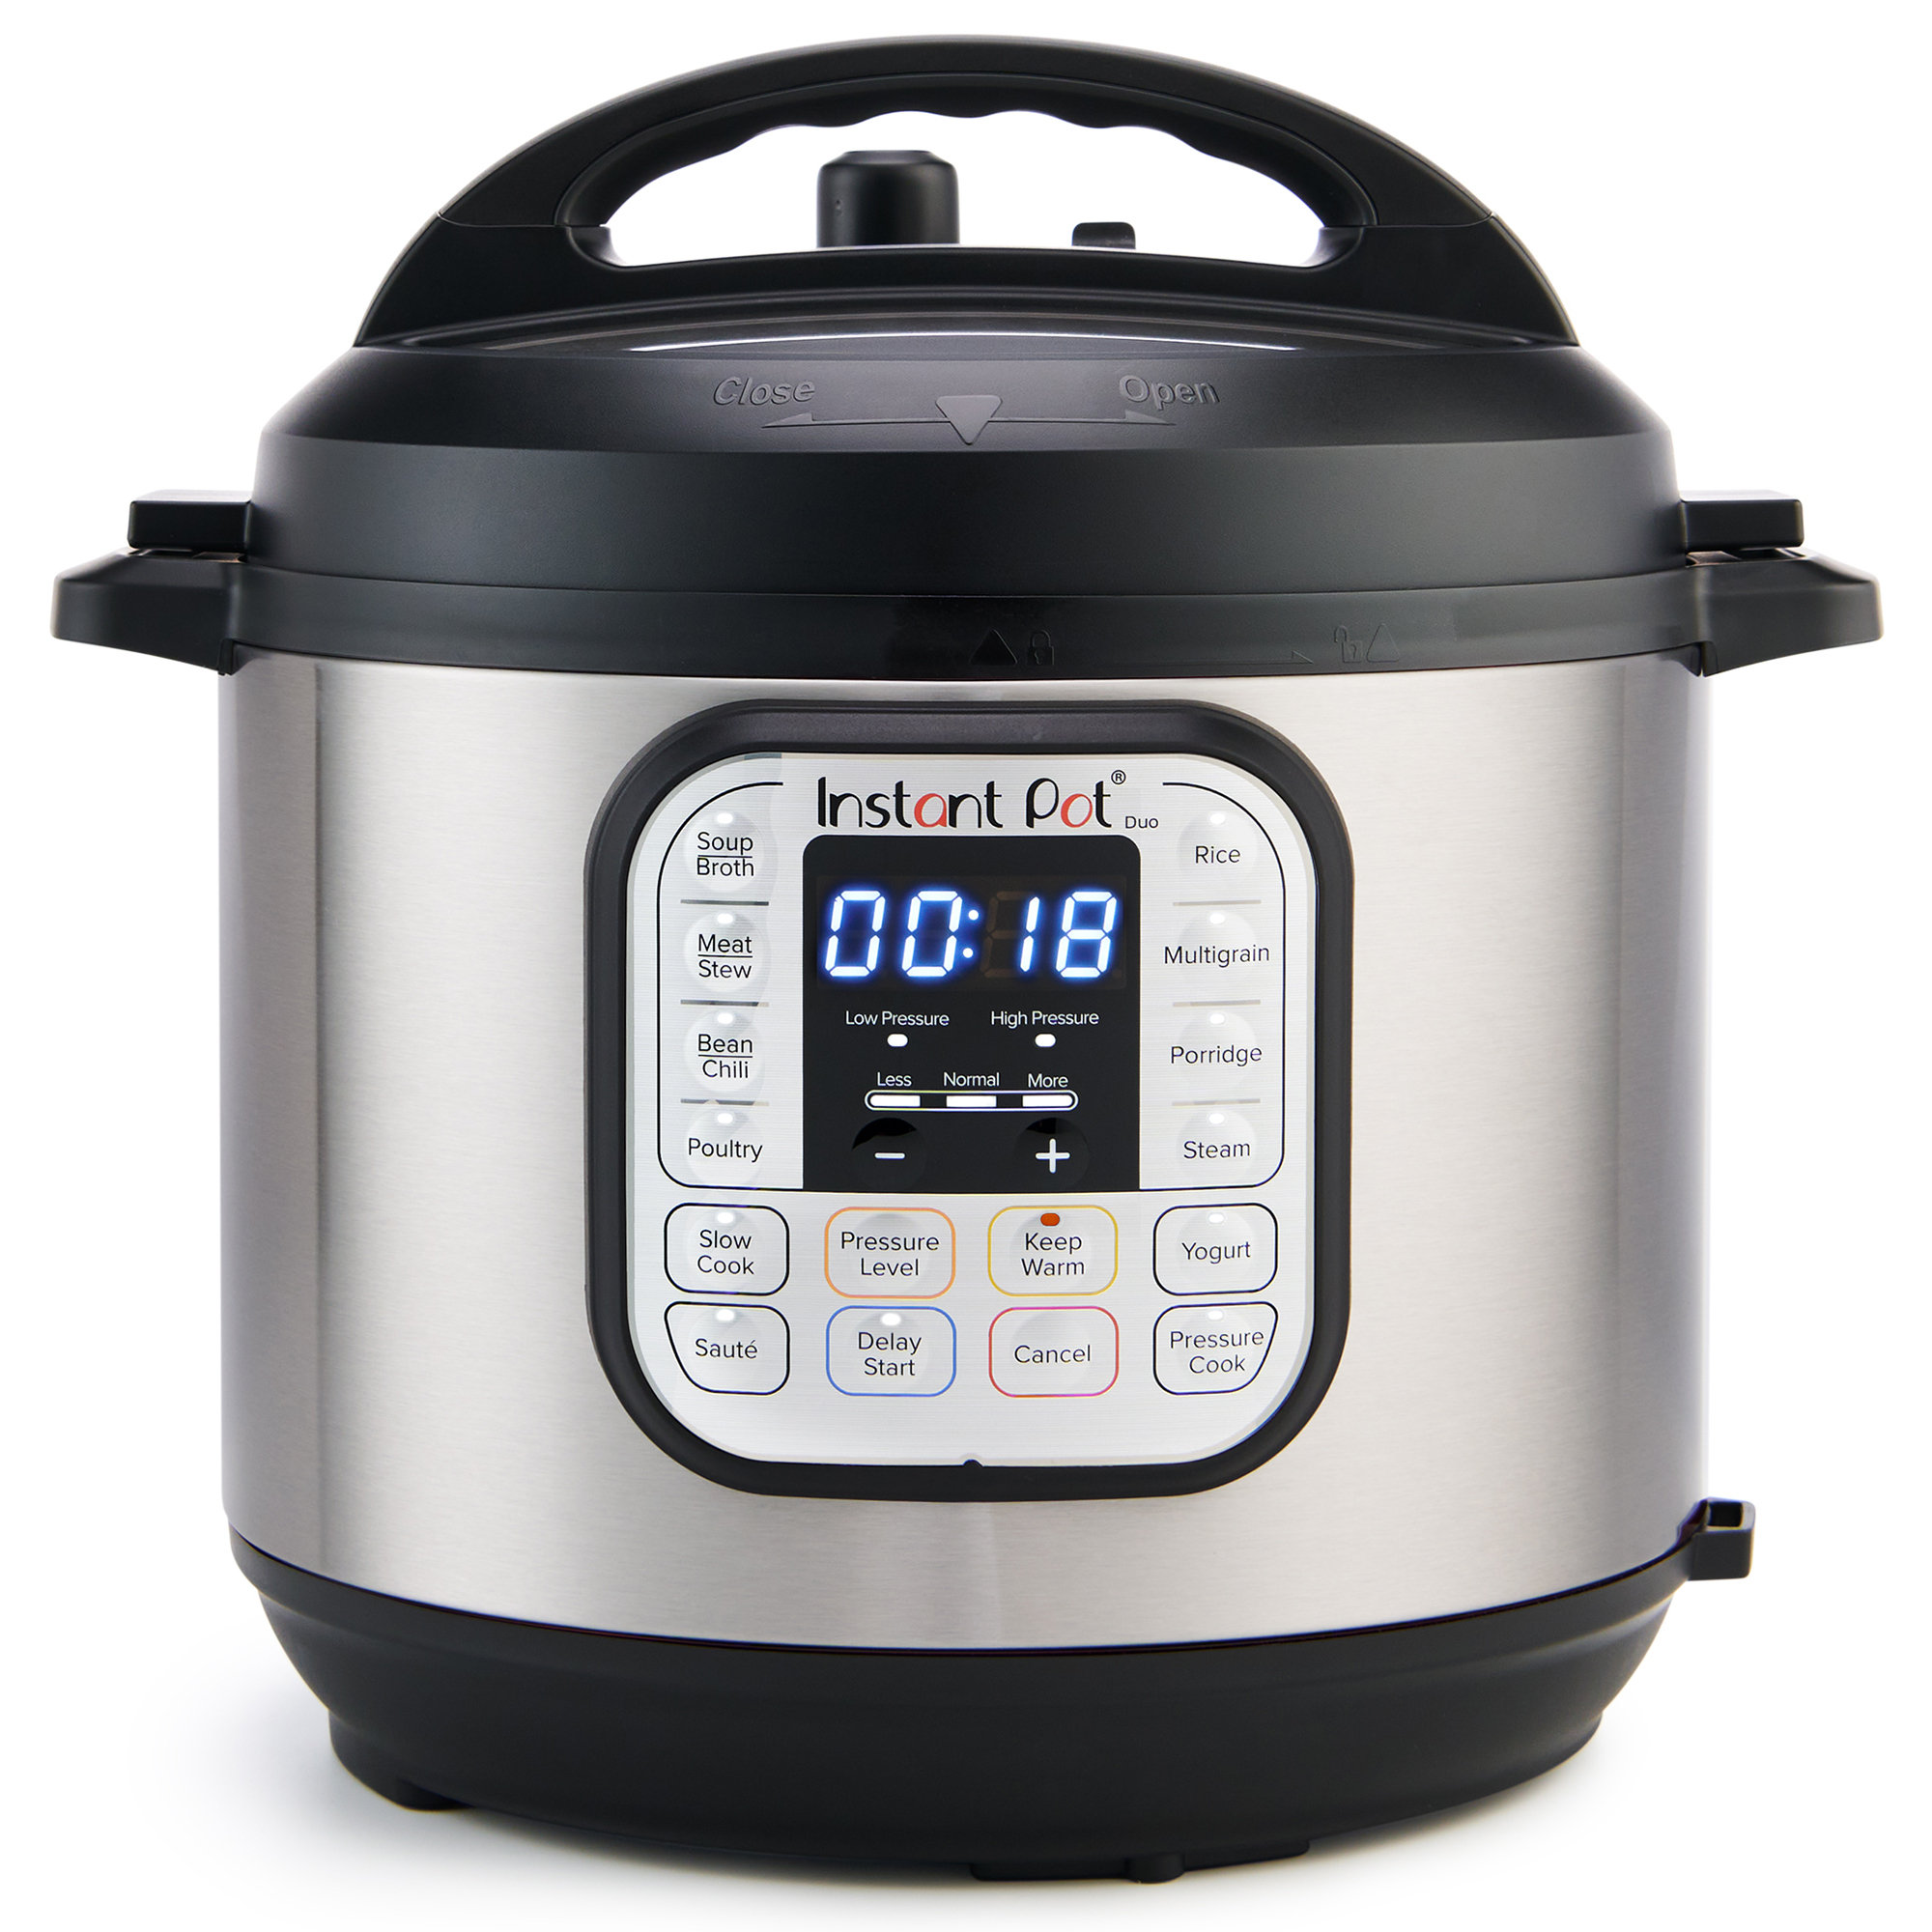 Silicone Roasting Rack for Pressure Cookers - Premium Instant Pot